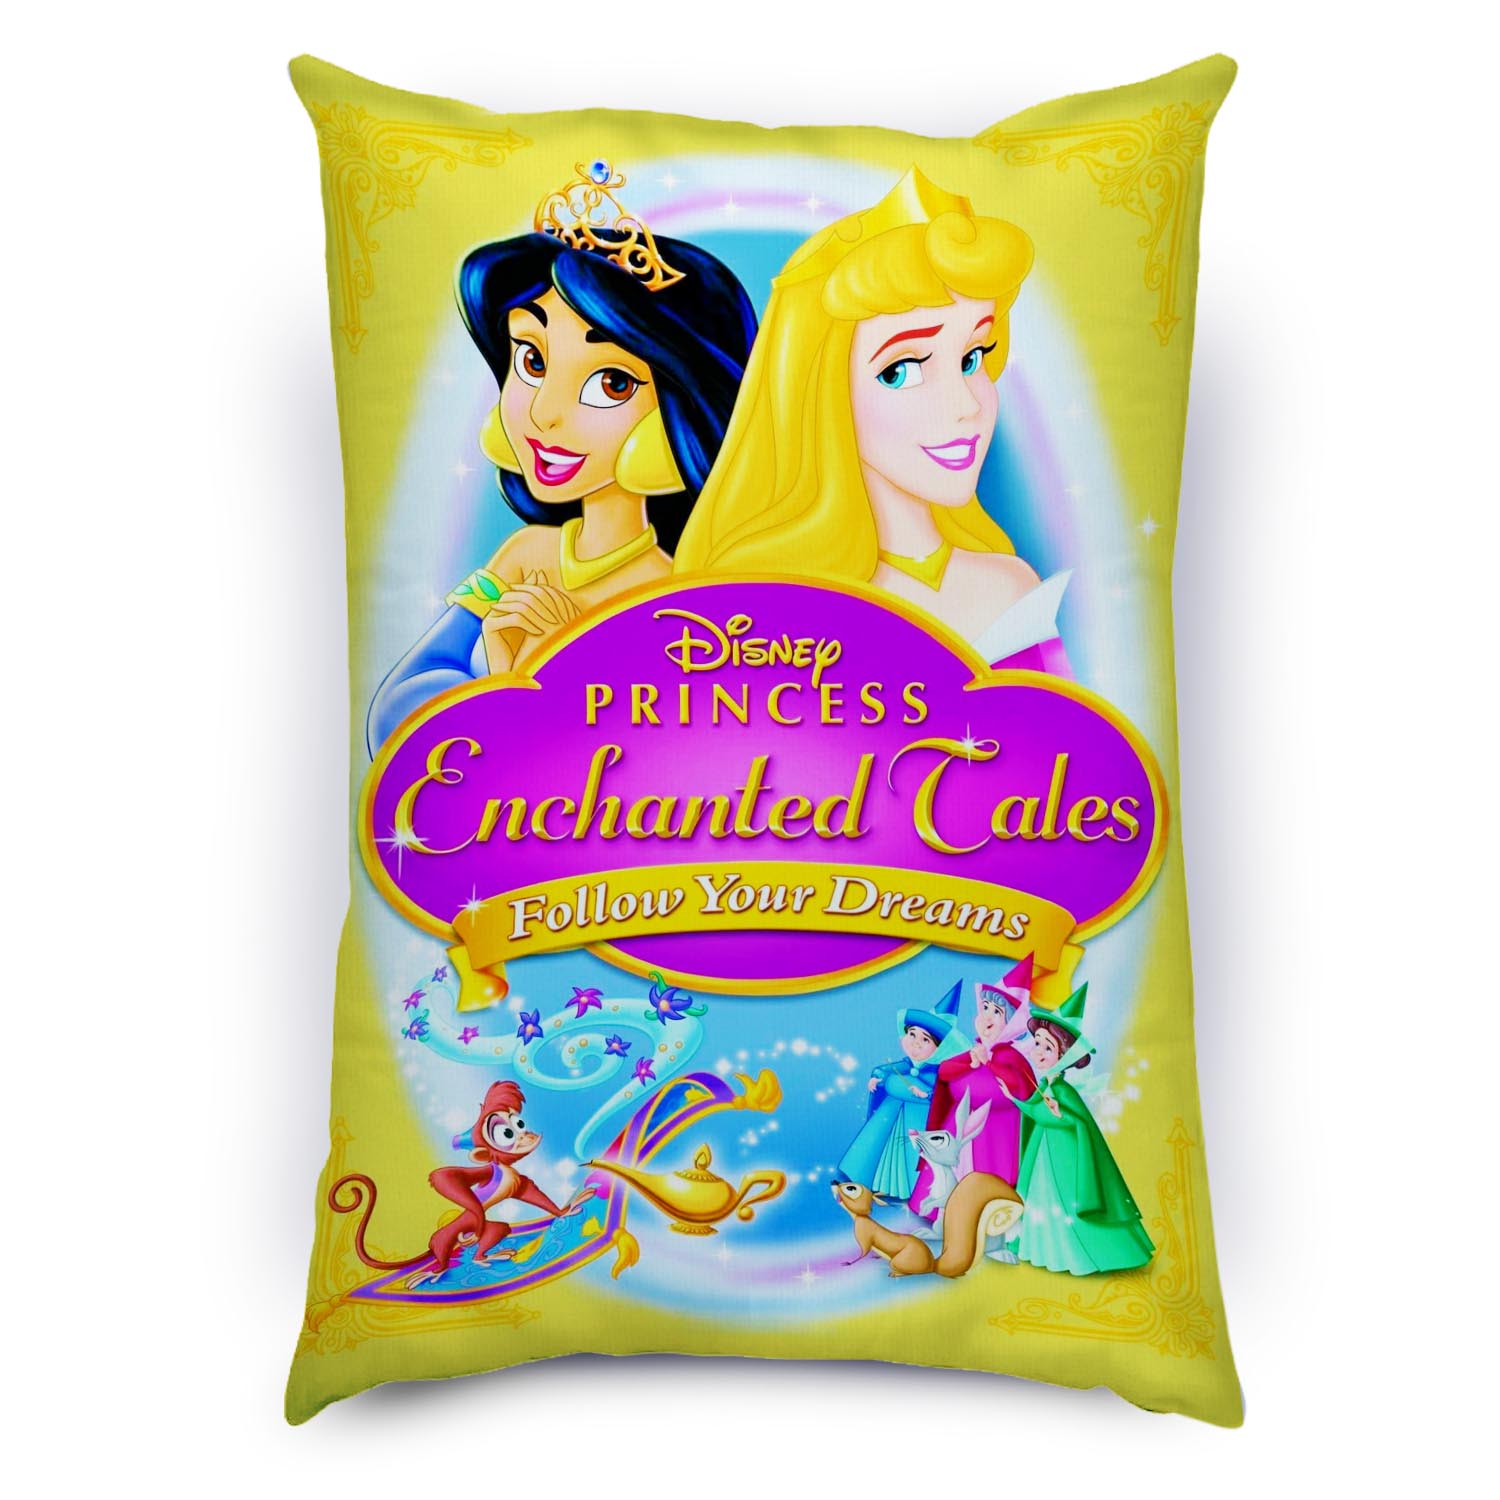 Enchanted Tales Pillow 13